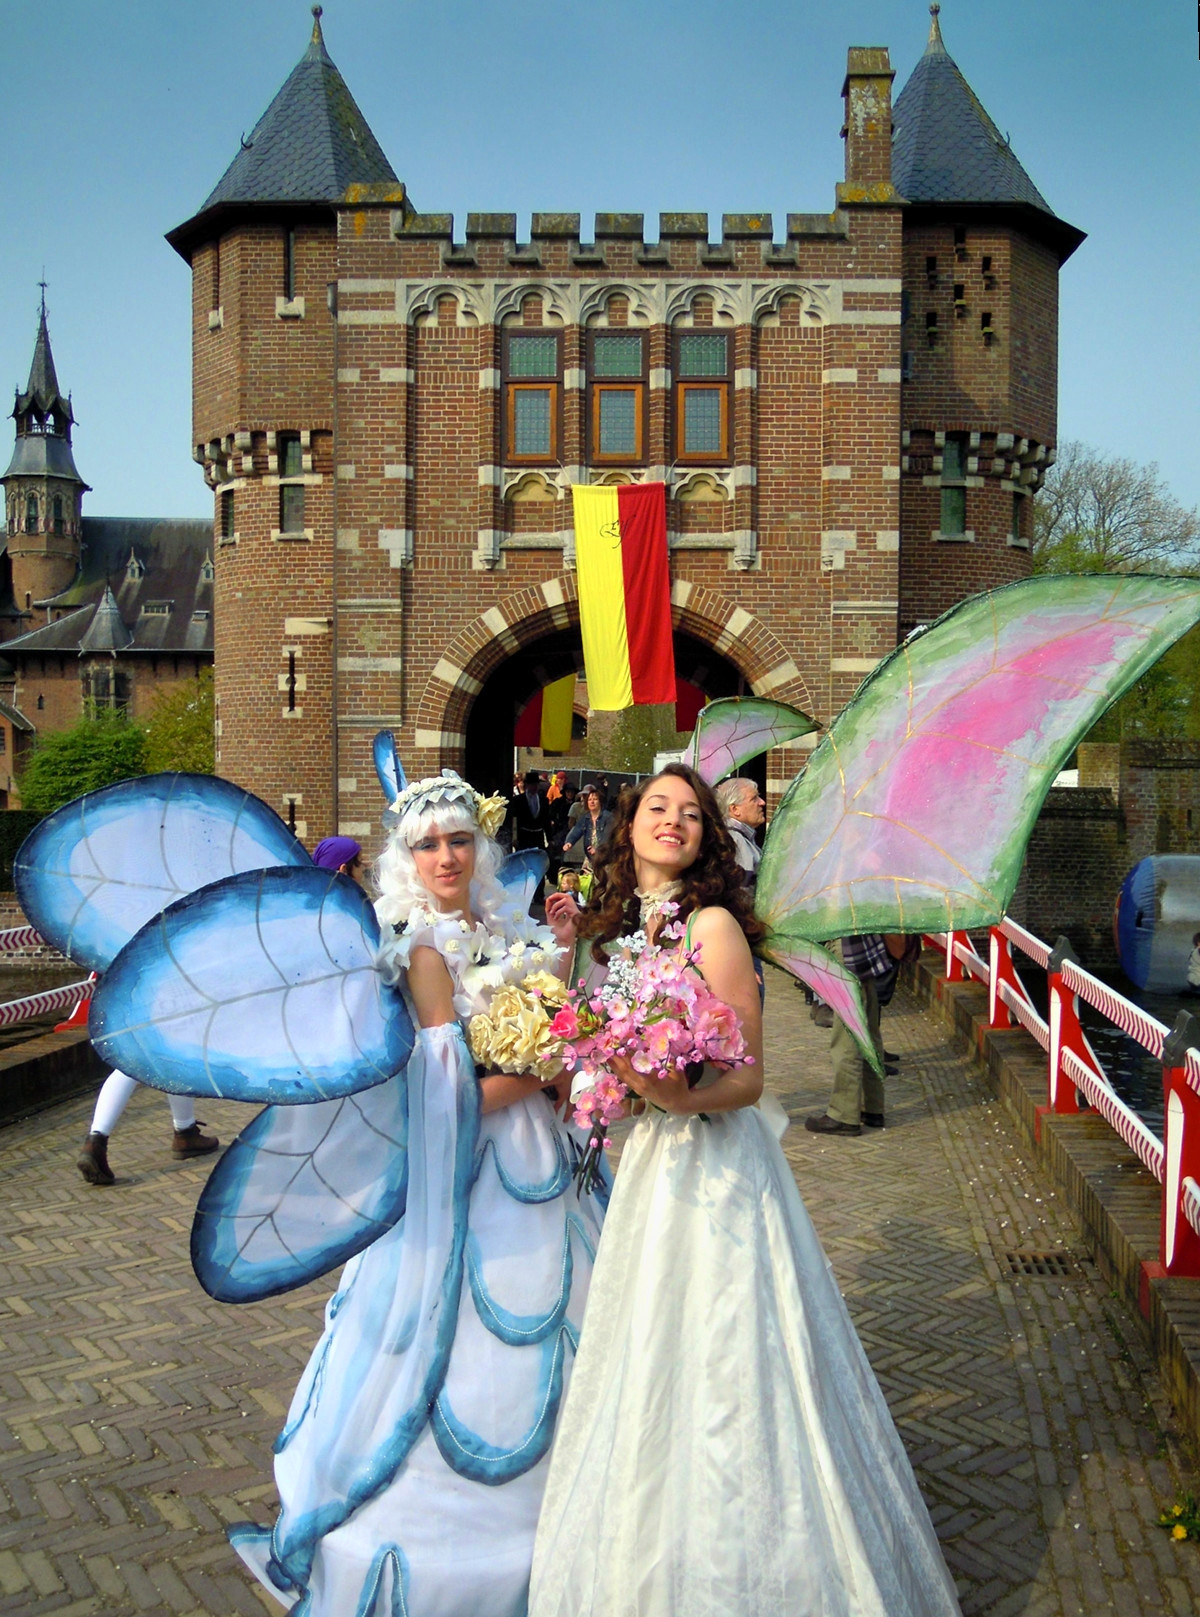 Two fairies at the Elf Fantasy Fair at Castle de Haar. Credit Juvarra